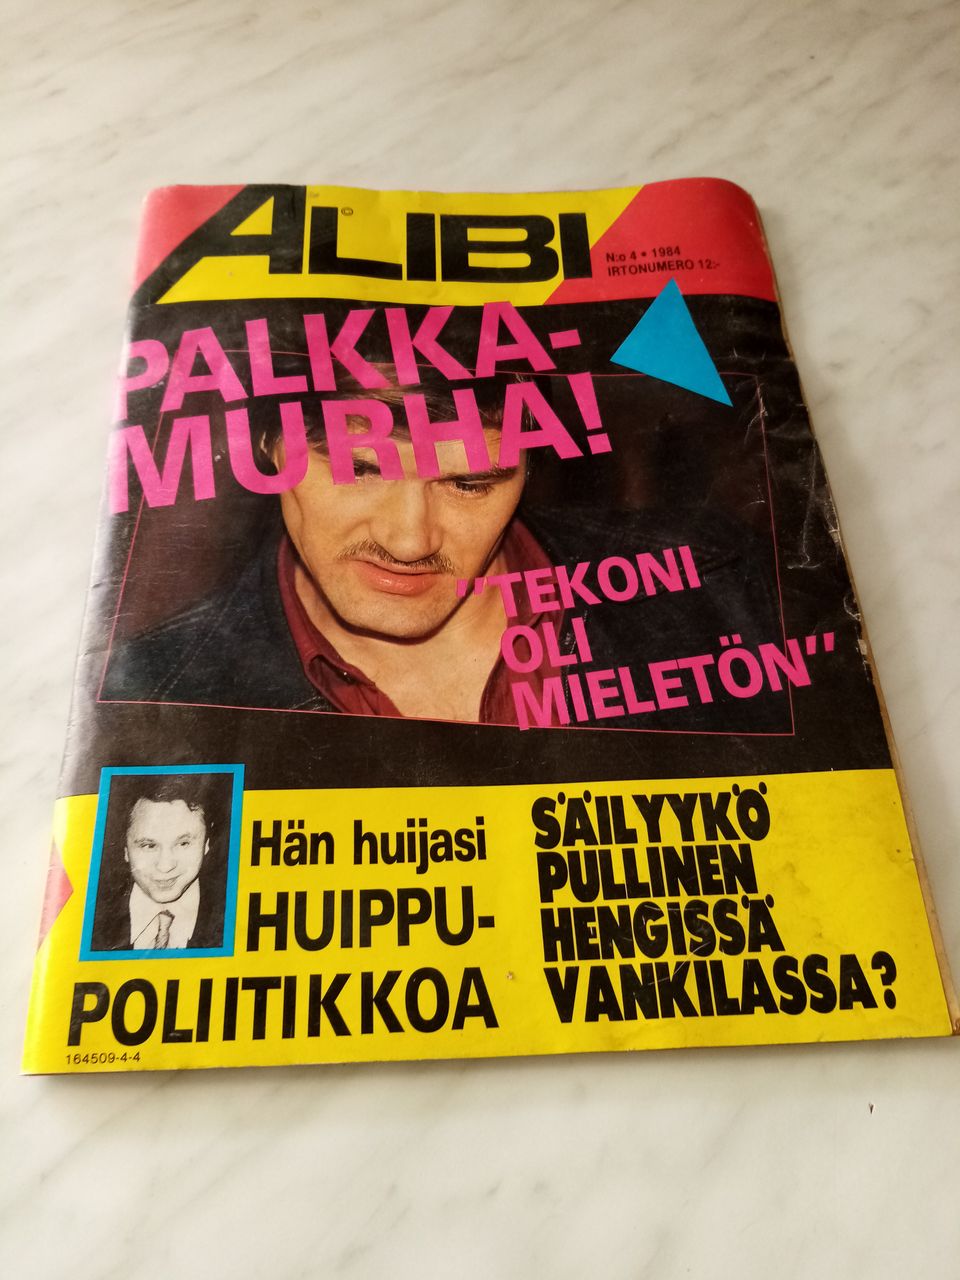 Alibi-lehti 4/1984